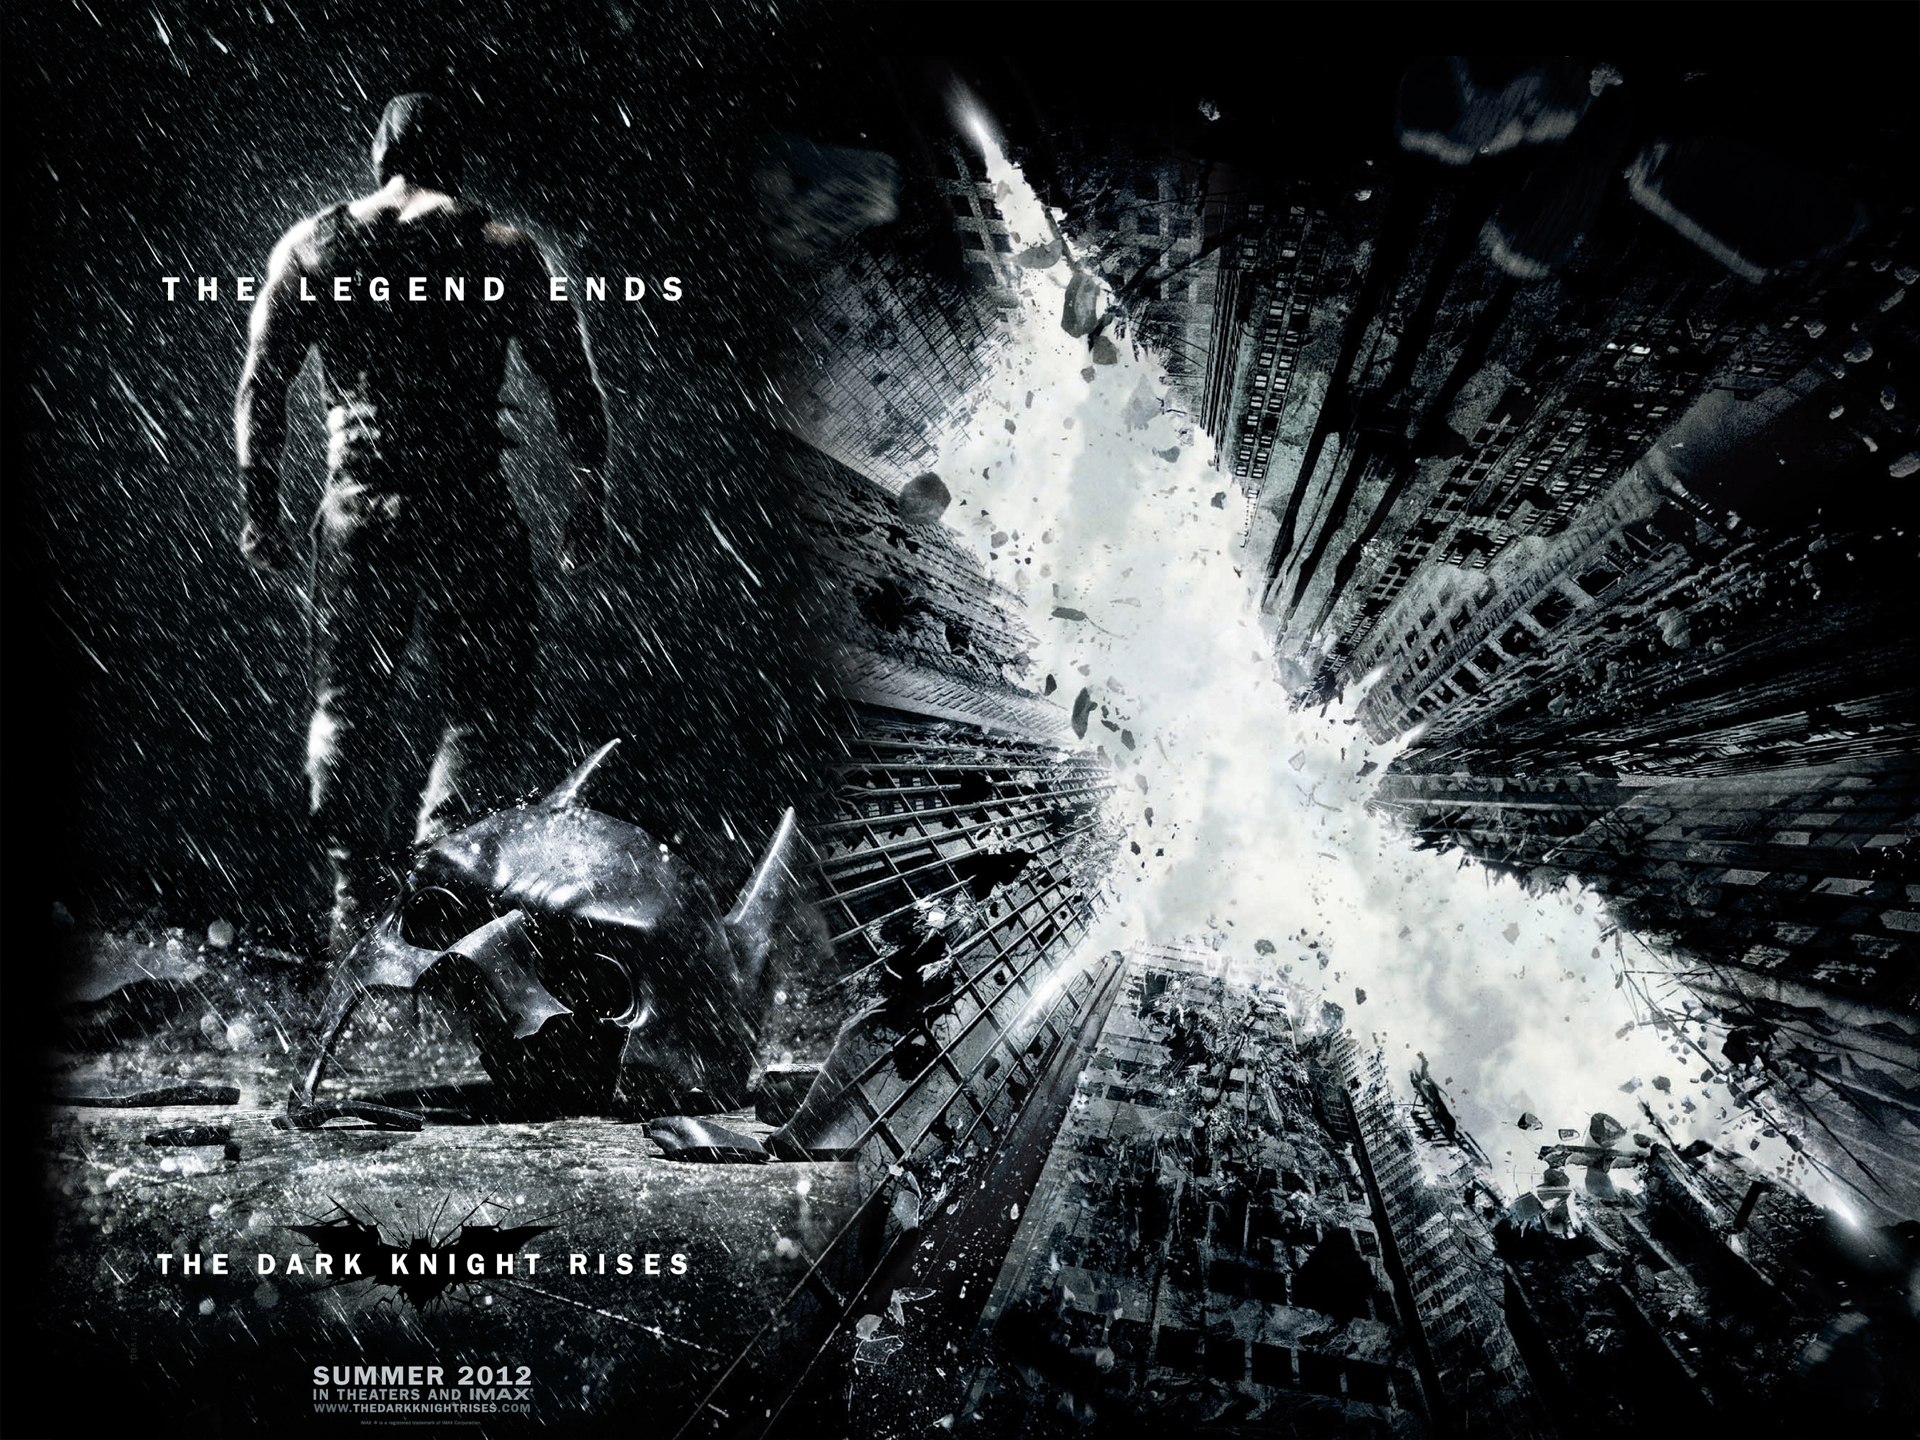 Dark Knight Rises HD Wallpaper And Desktop Background